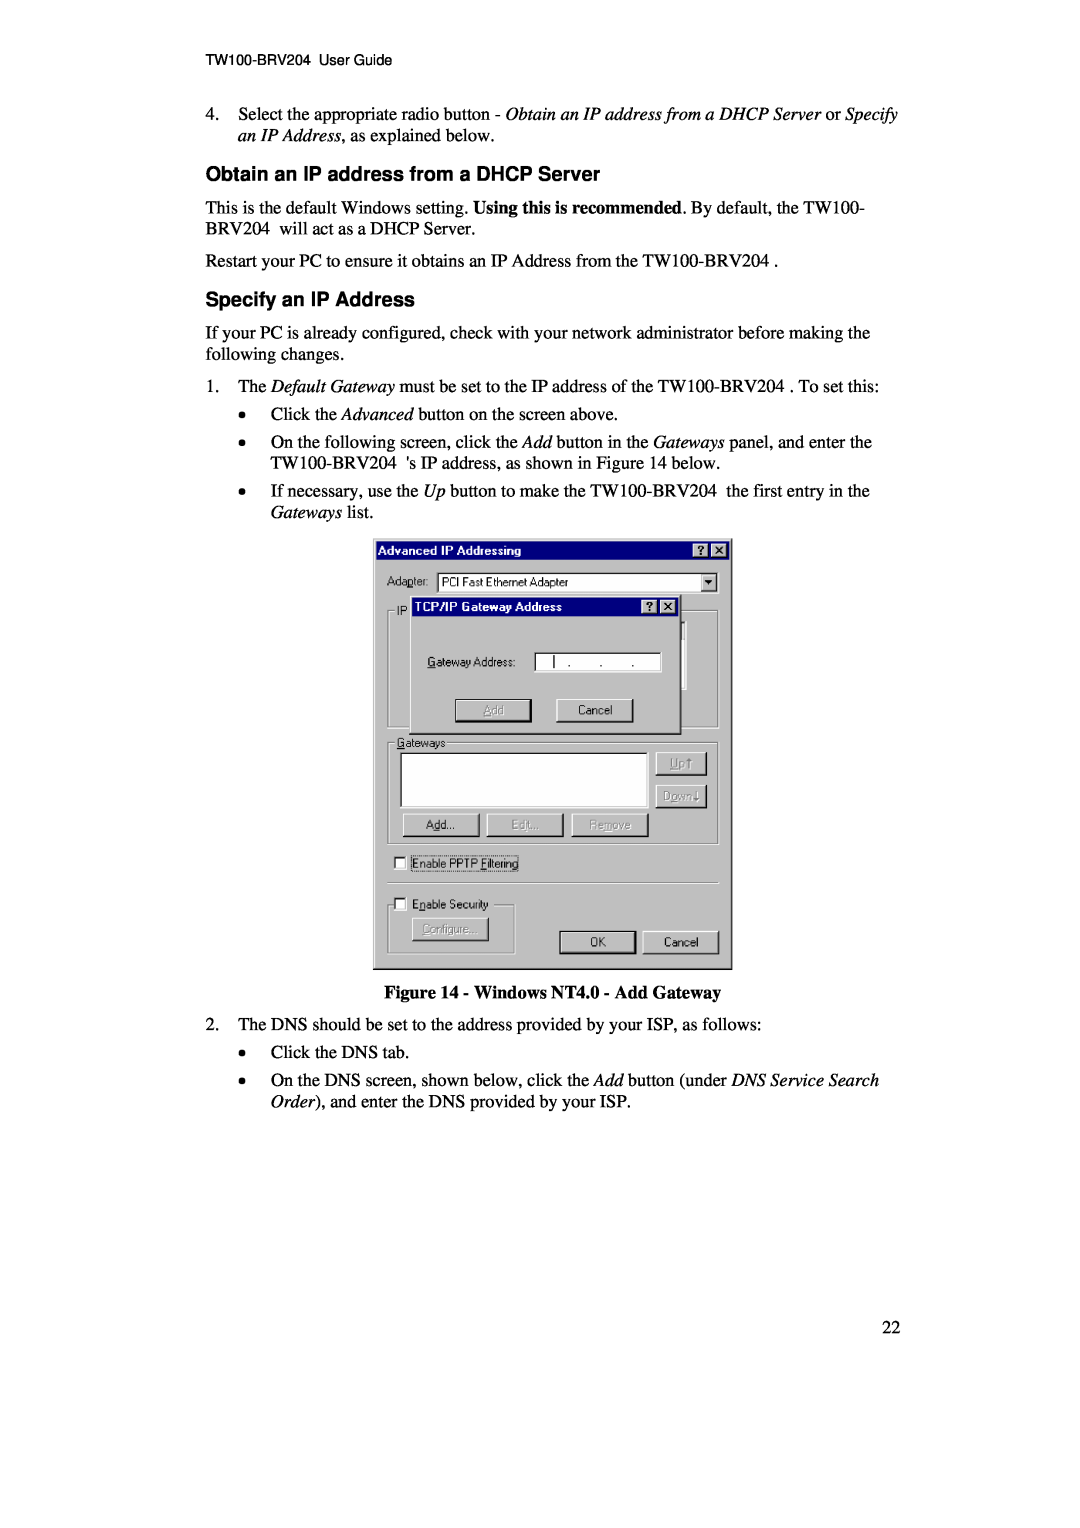 TRENDnet BRV204 manual Obtain an IP address from a DHCP Server, Specify an IP Address, Windows NT4.0 - Add Gateway 